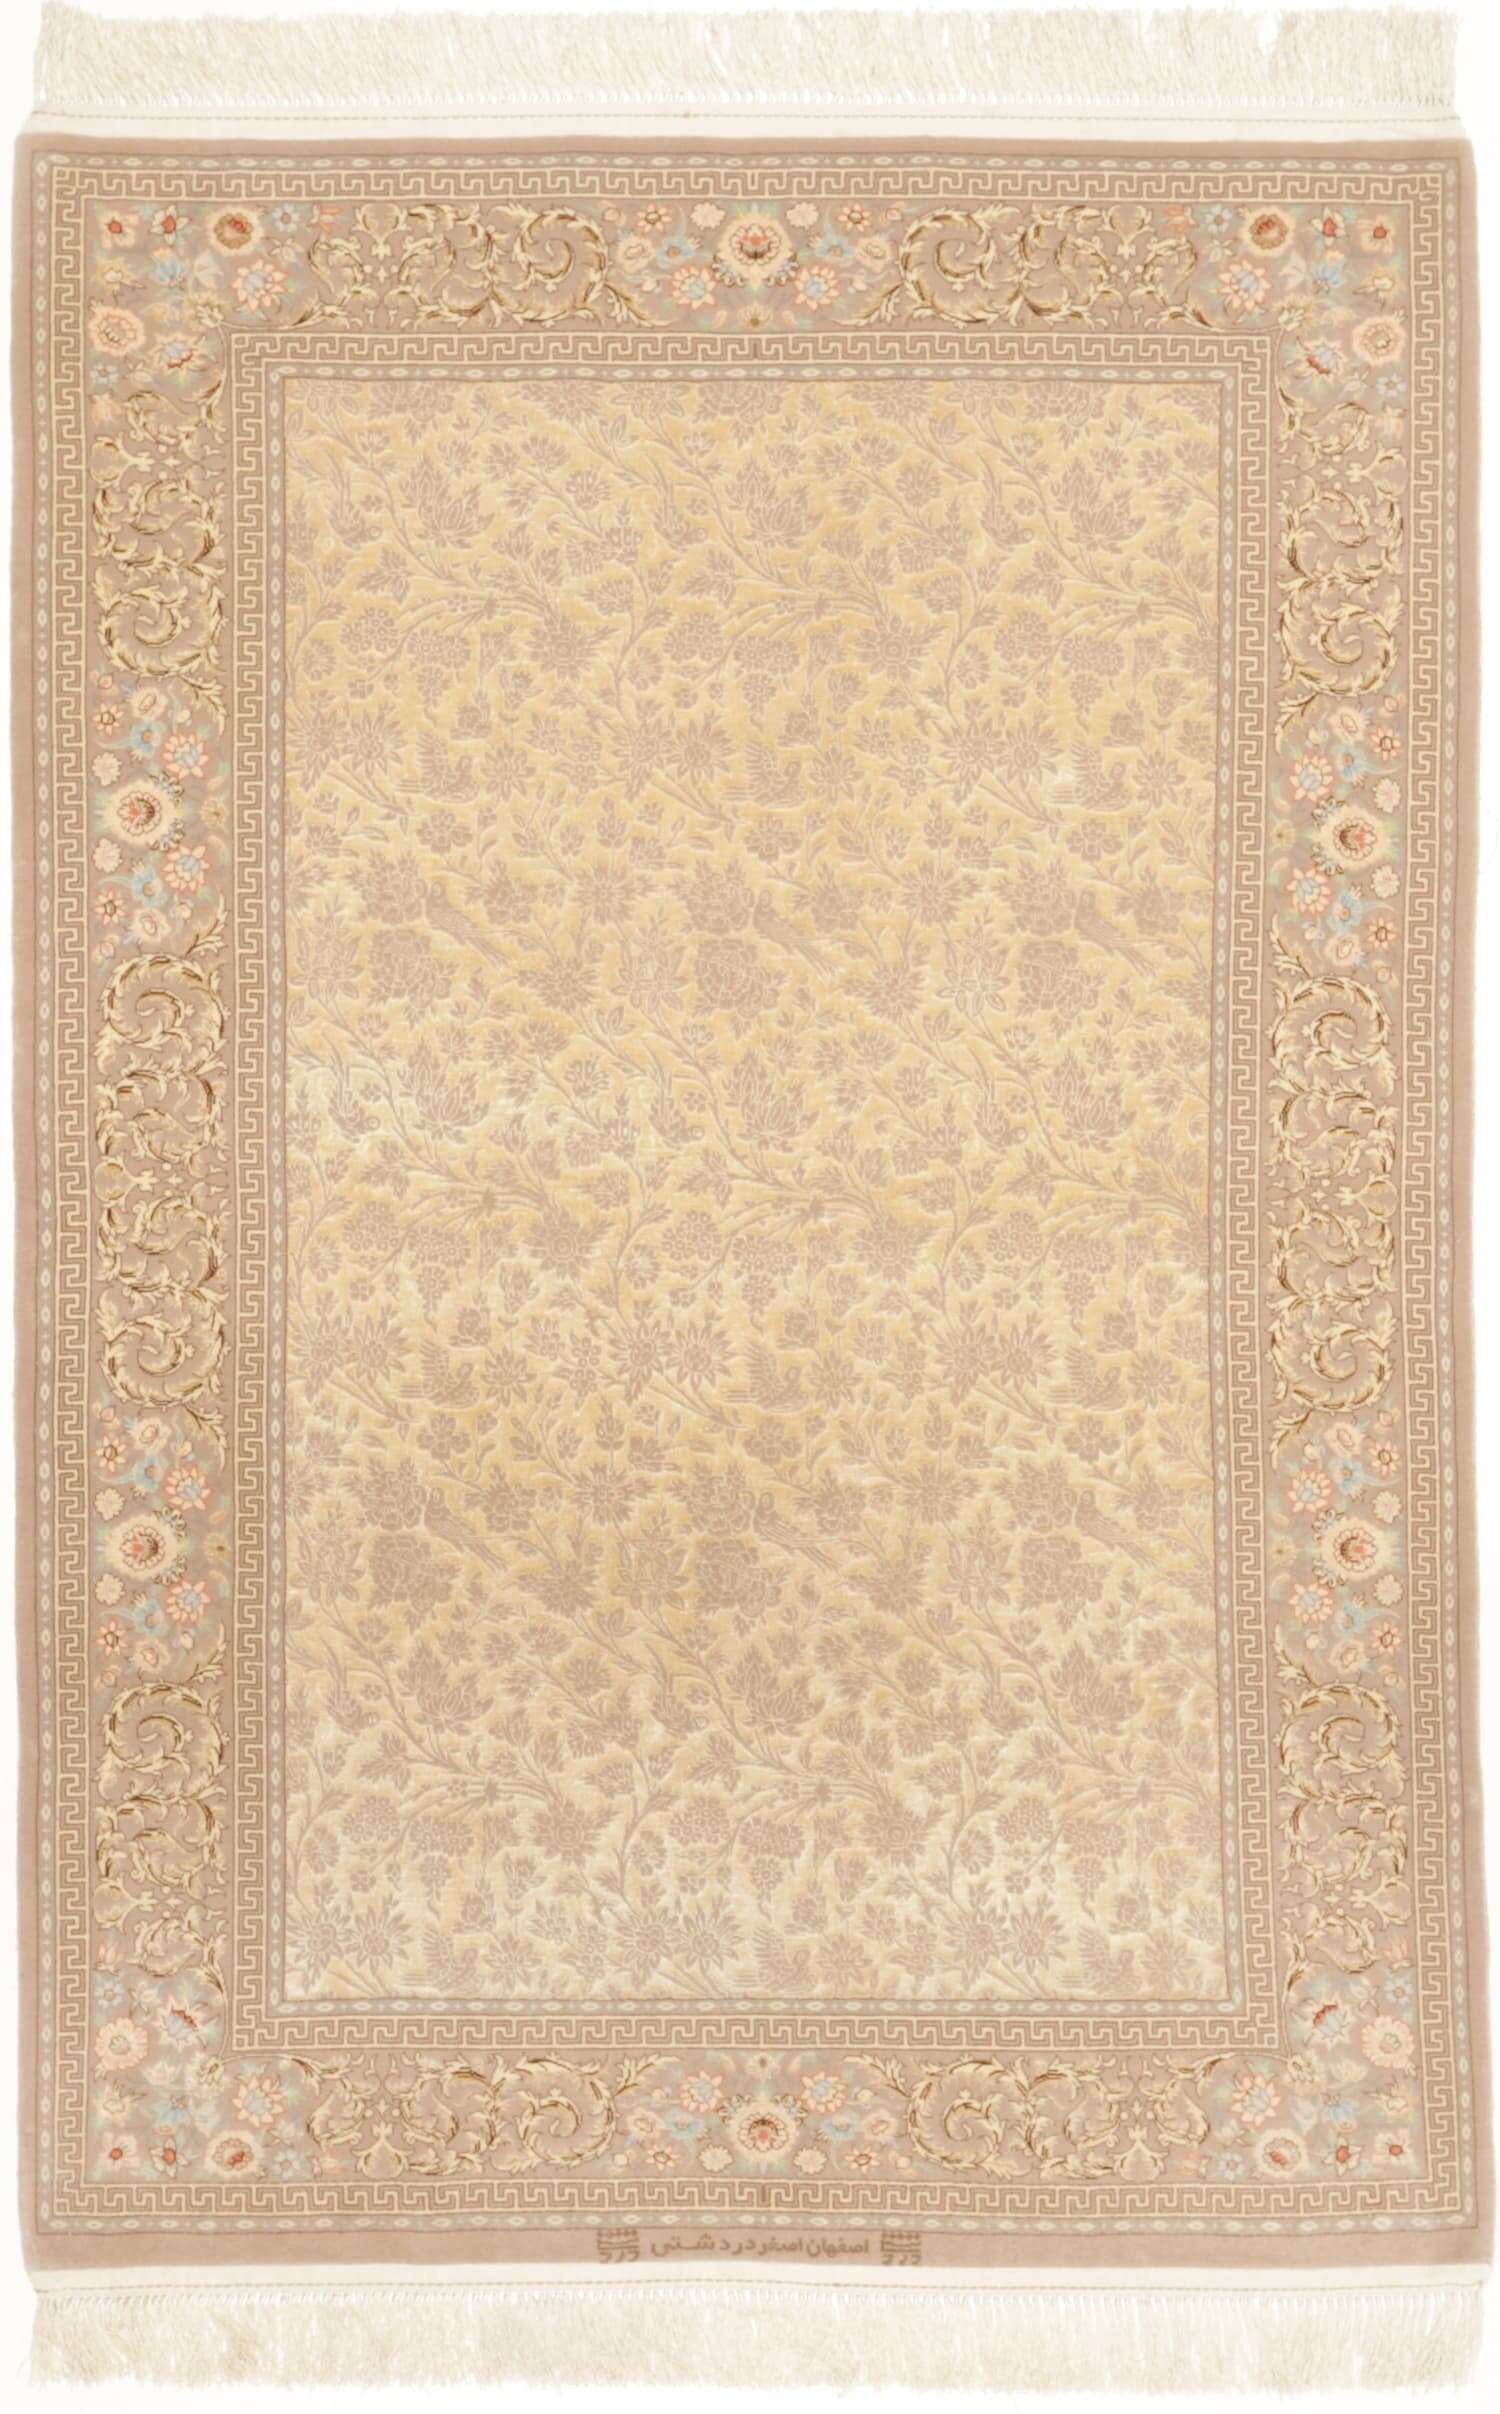 Teppich Isfahan 110x160cm 70% Seide/30% Wolle Dardashti